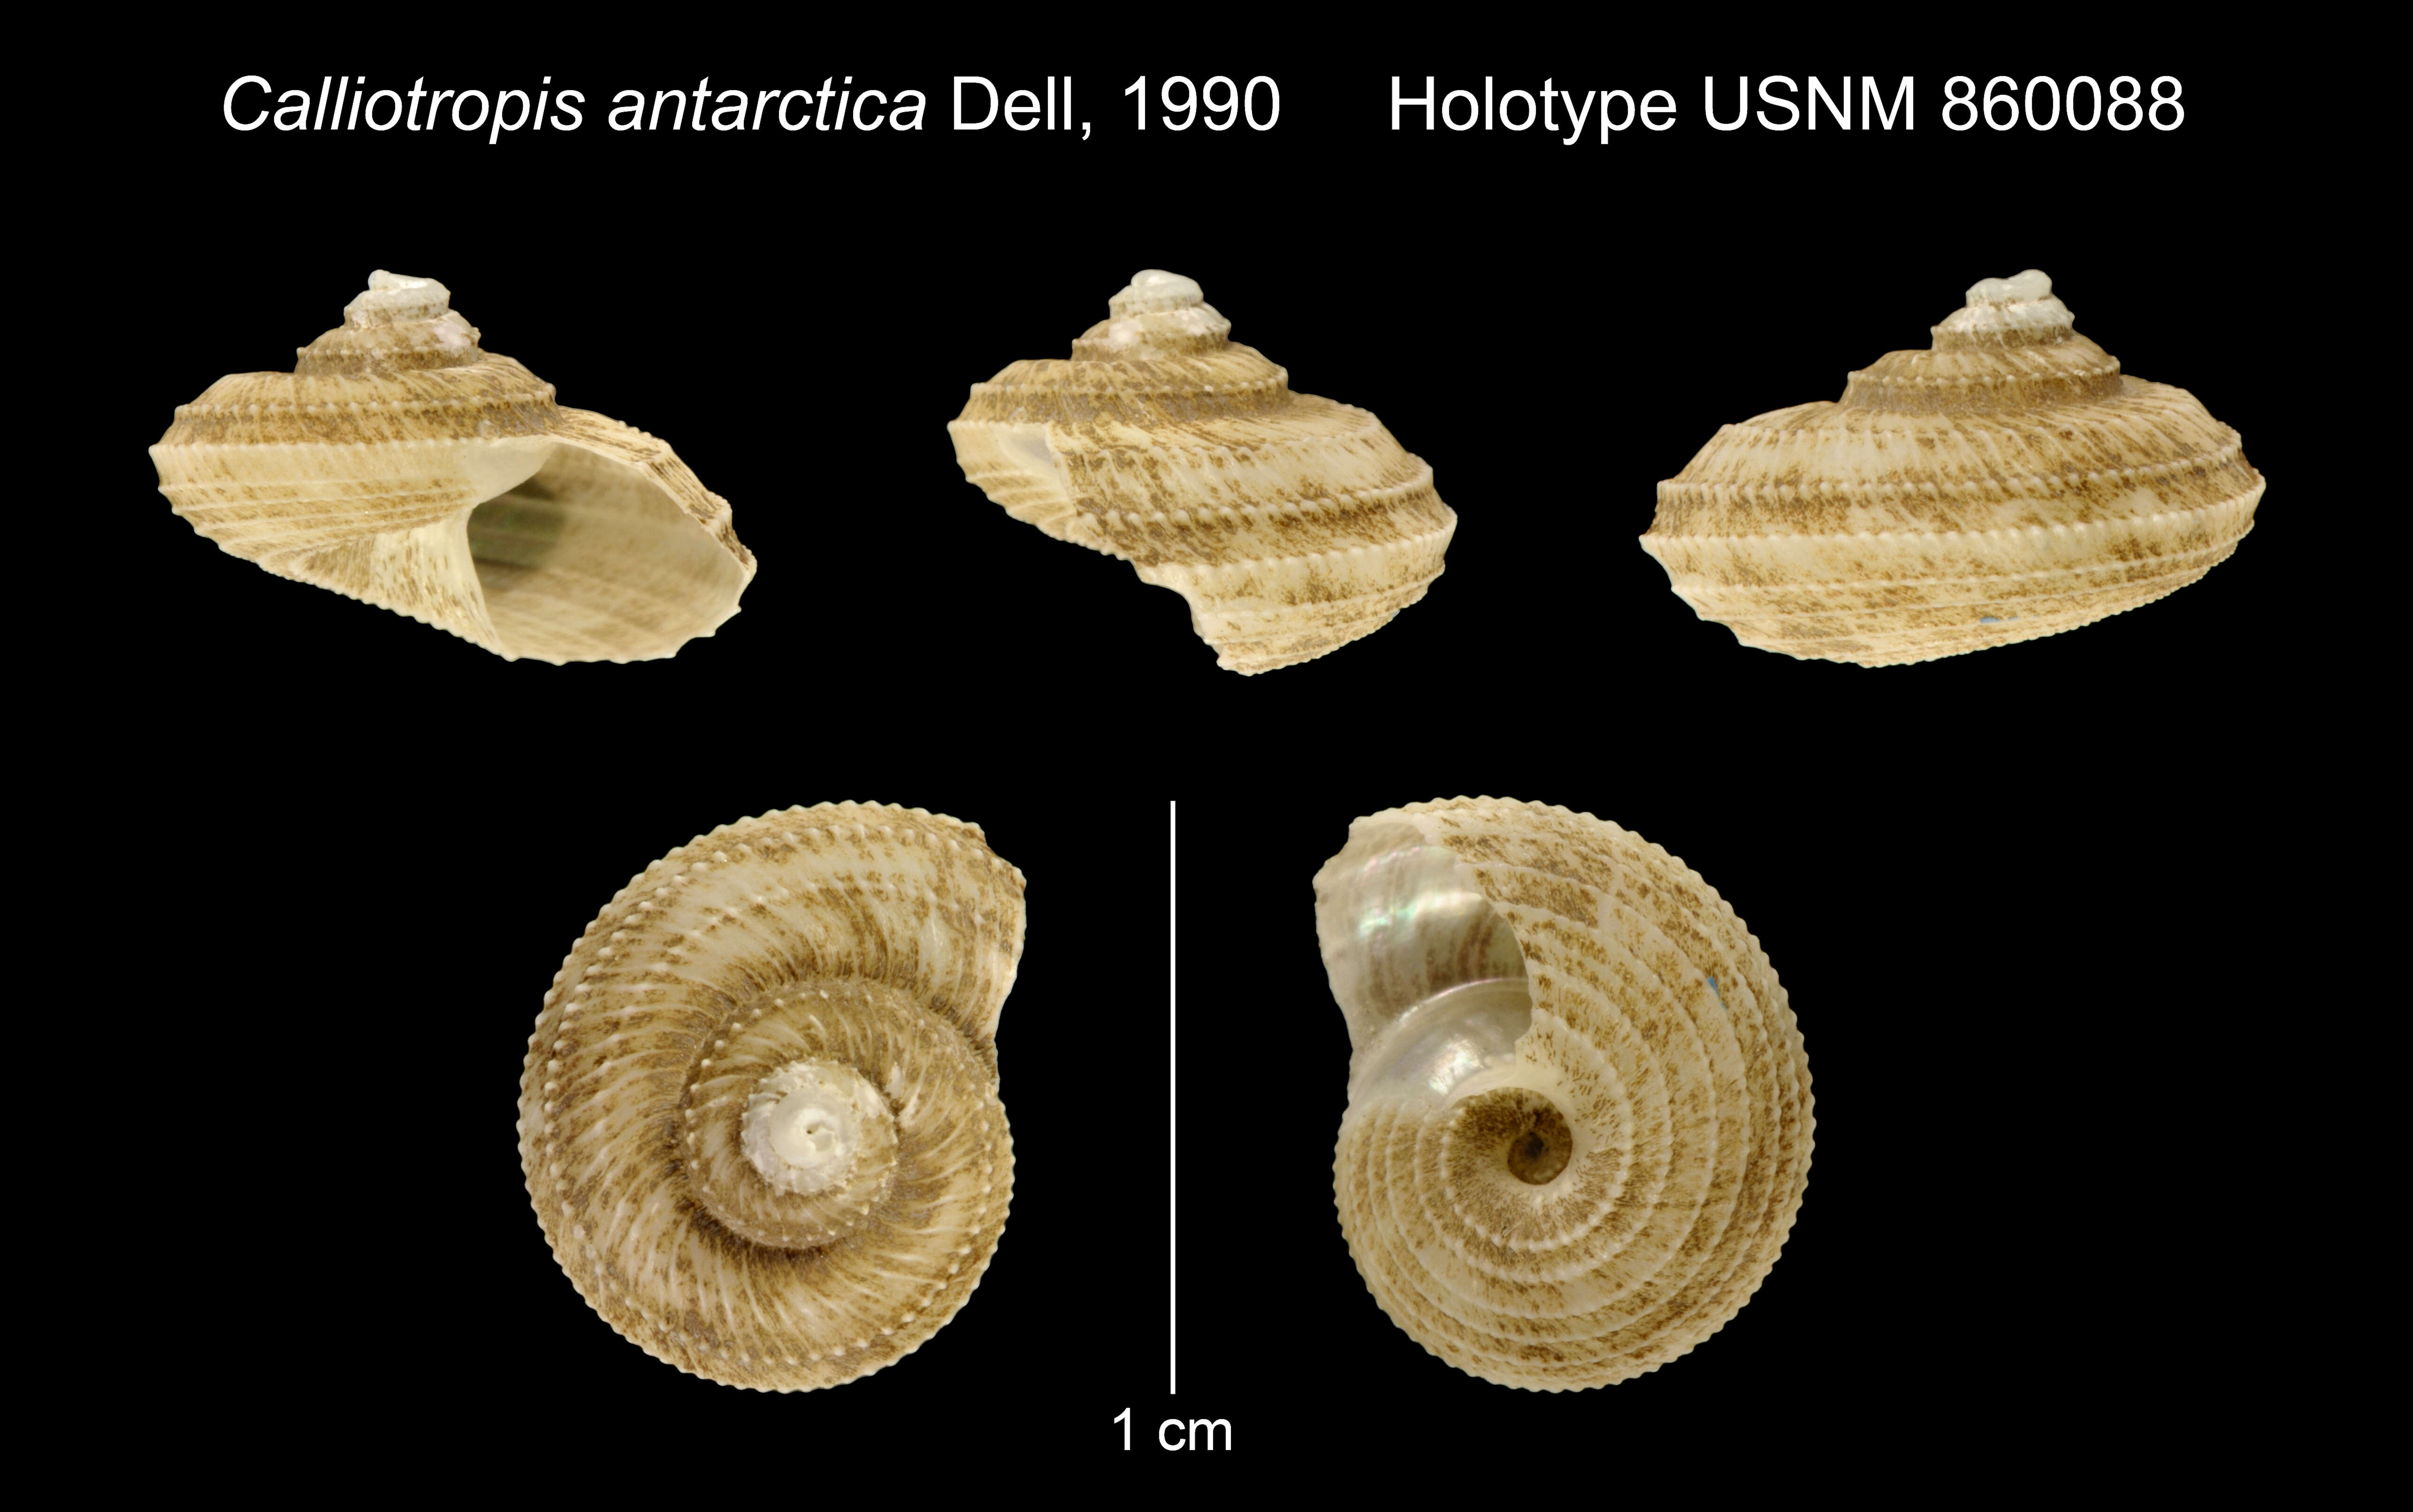 Image de Calliotropis antarctica Dell 1990